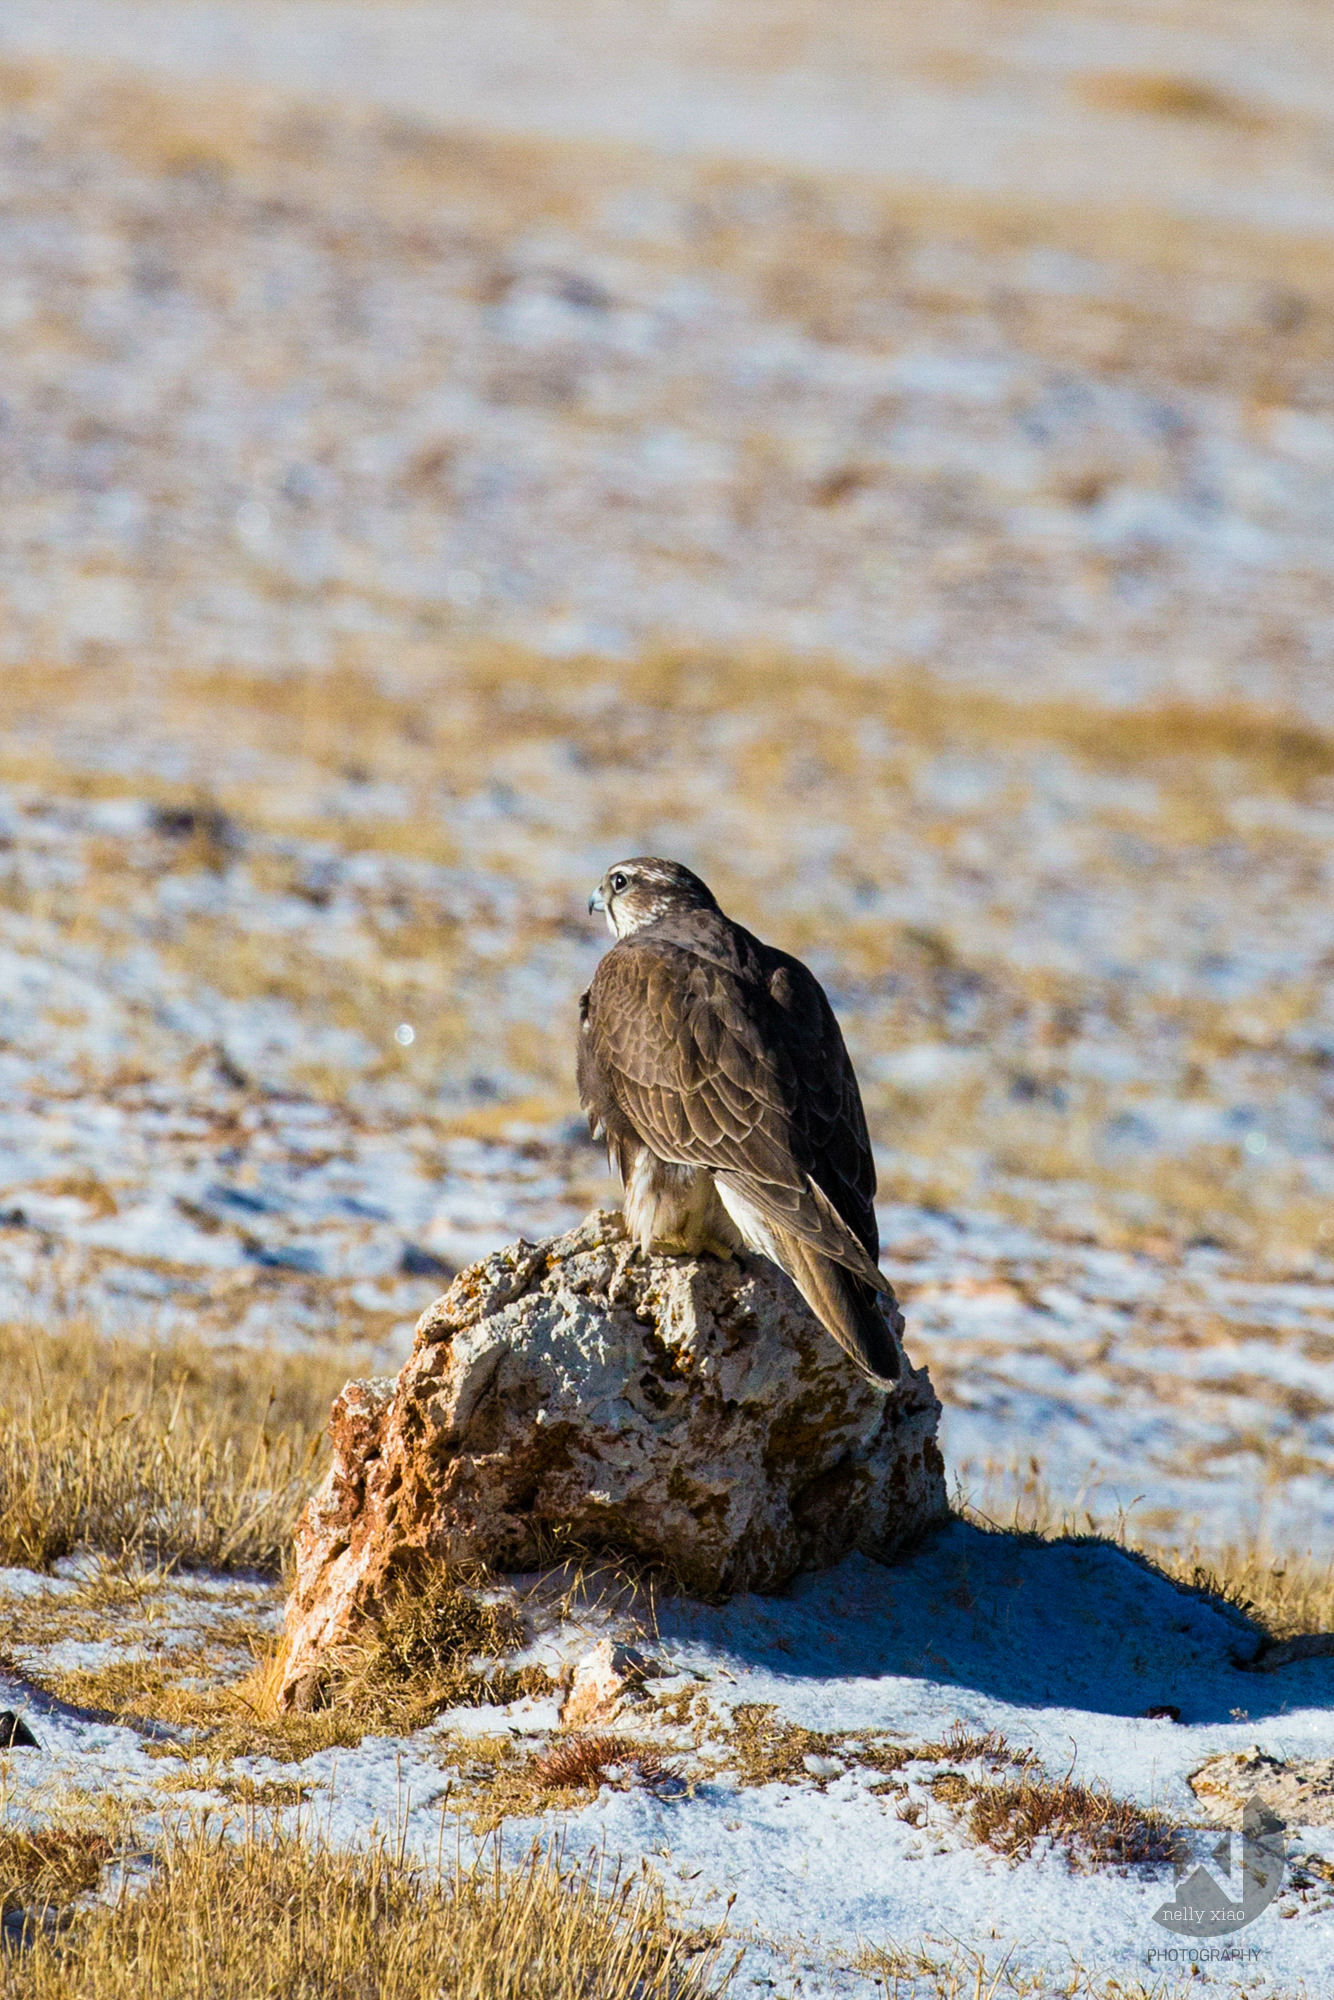   Saker falcon   Kekexili Wildlife Conservation, October 2015&nbsp; 